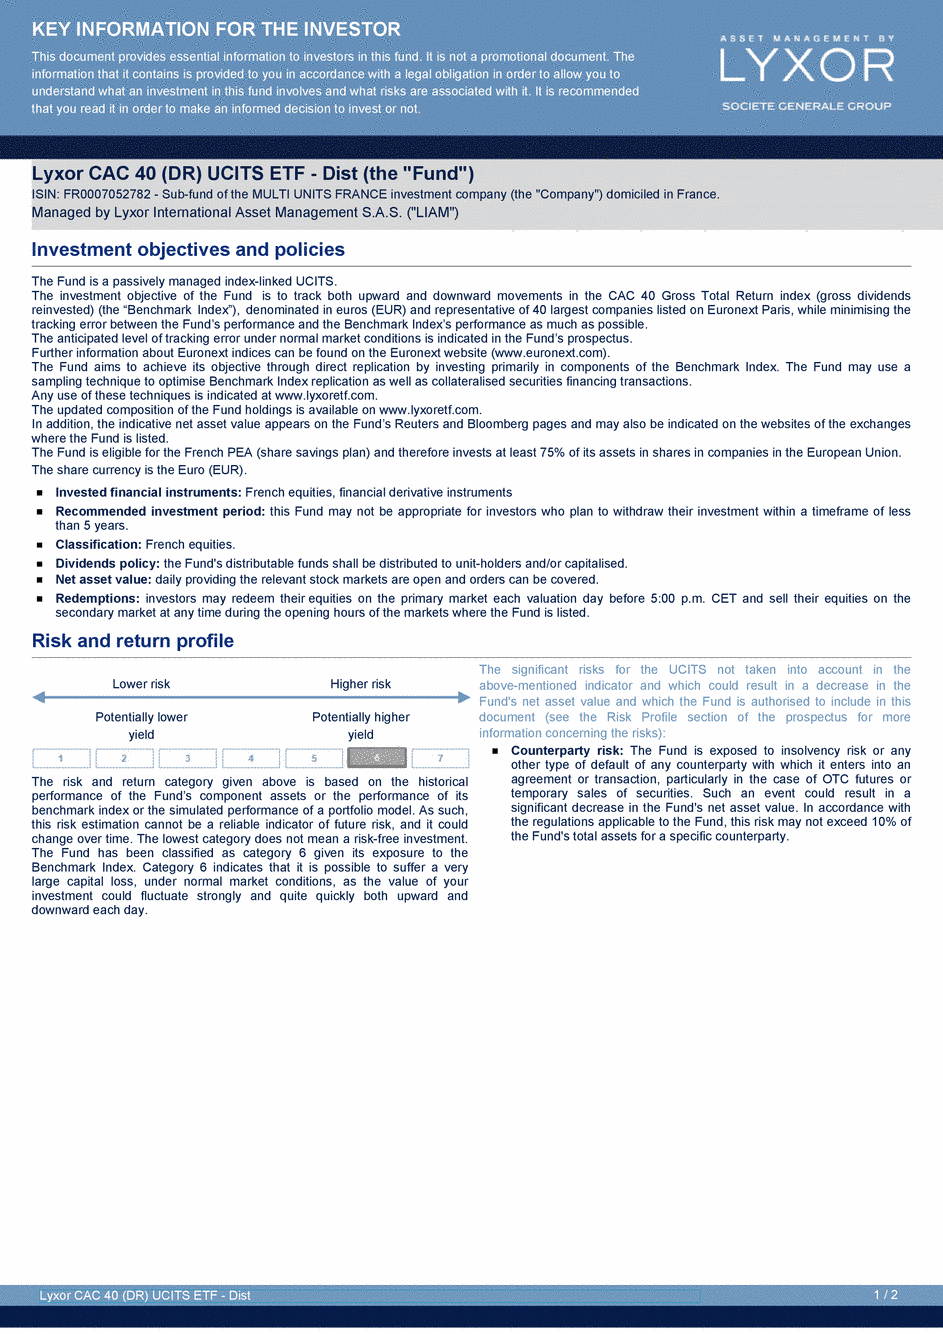 DICI Lyxor CAC 40 (DR) UCITS ETF - Dist - 21/07/2020 - Anglais